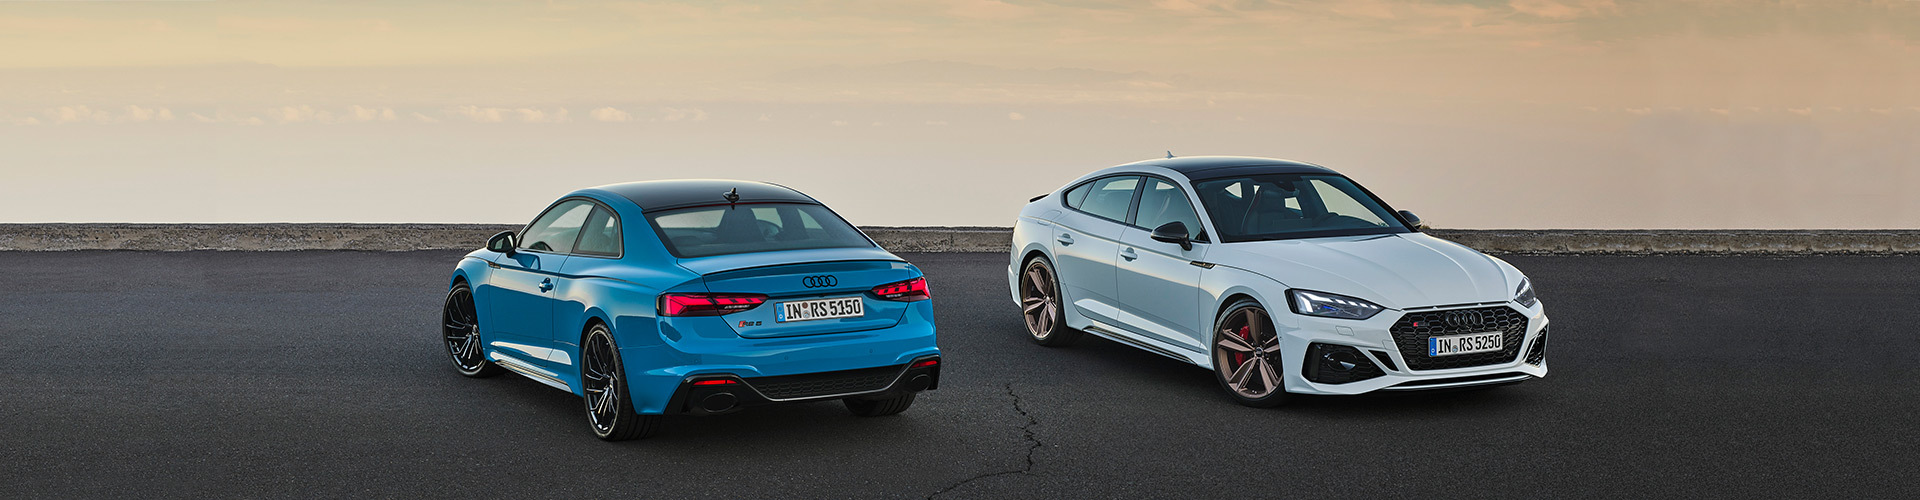 Audi RS 5 Coupe in blau und RS 5 Sportback in weiß